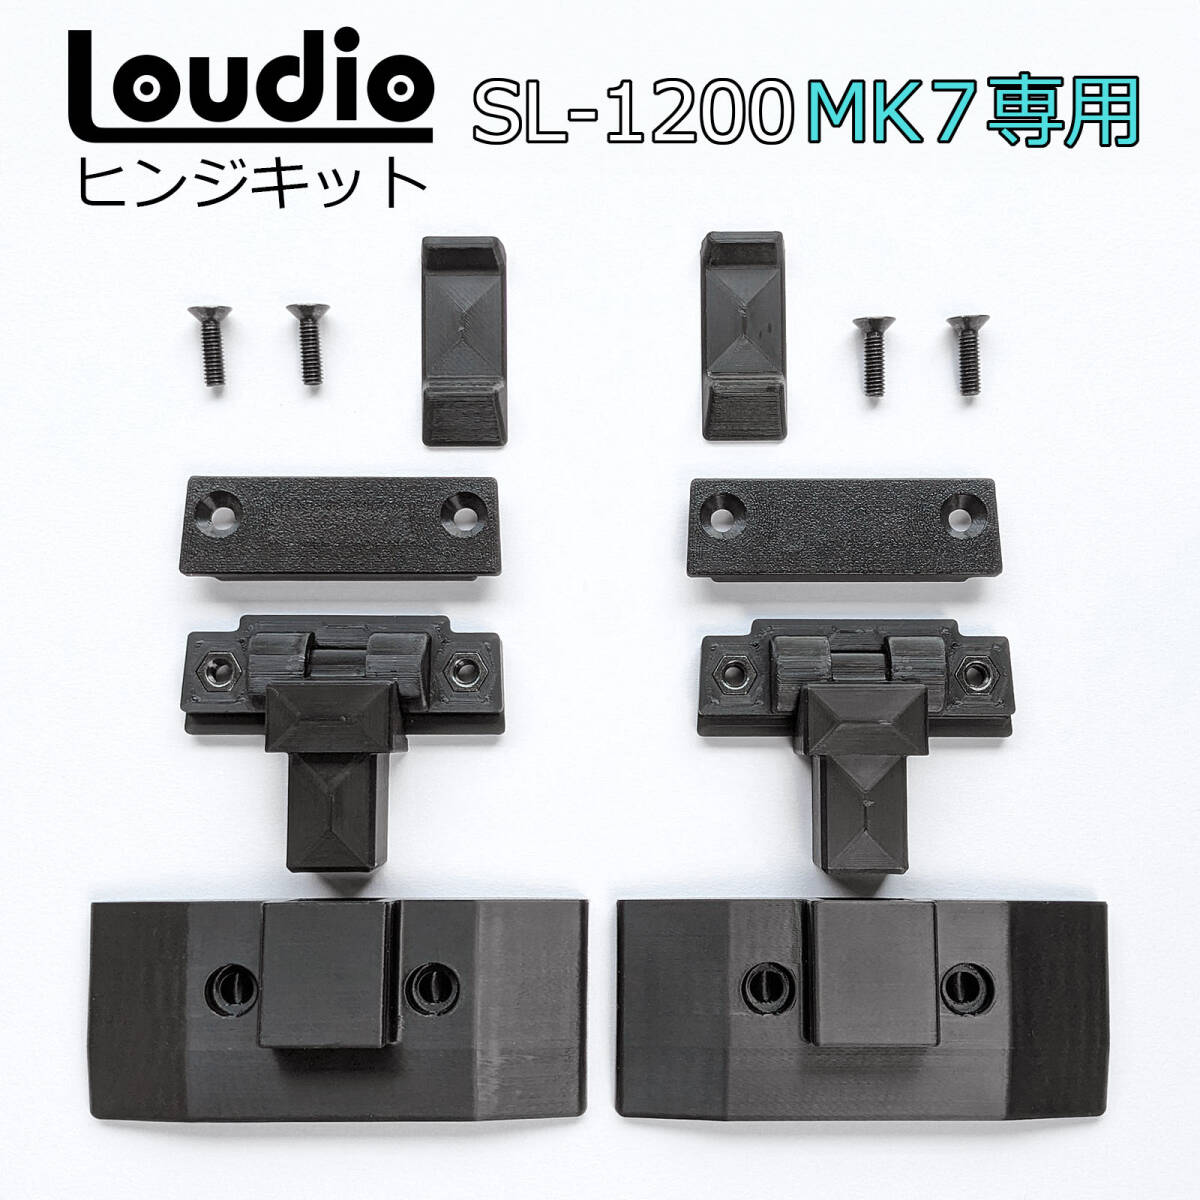 MK7 exclusive use dust cover hinge kit conform : Technics TECHNICS SL-1200MK7 turntable analogue record player (Loudio Hinge Kit